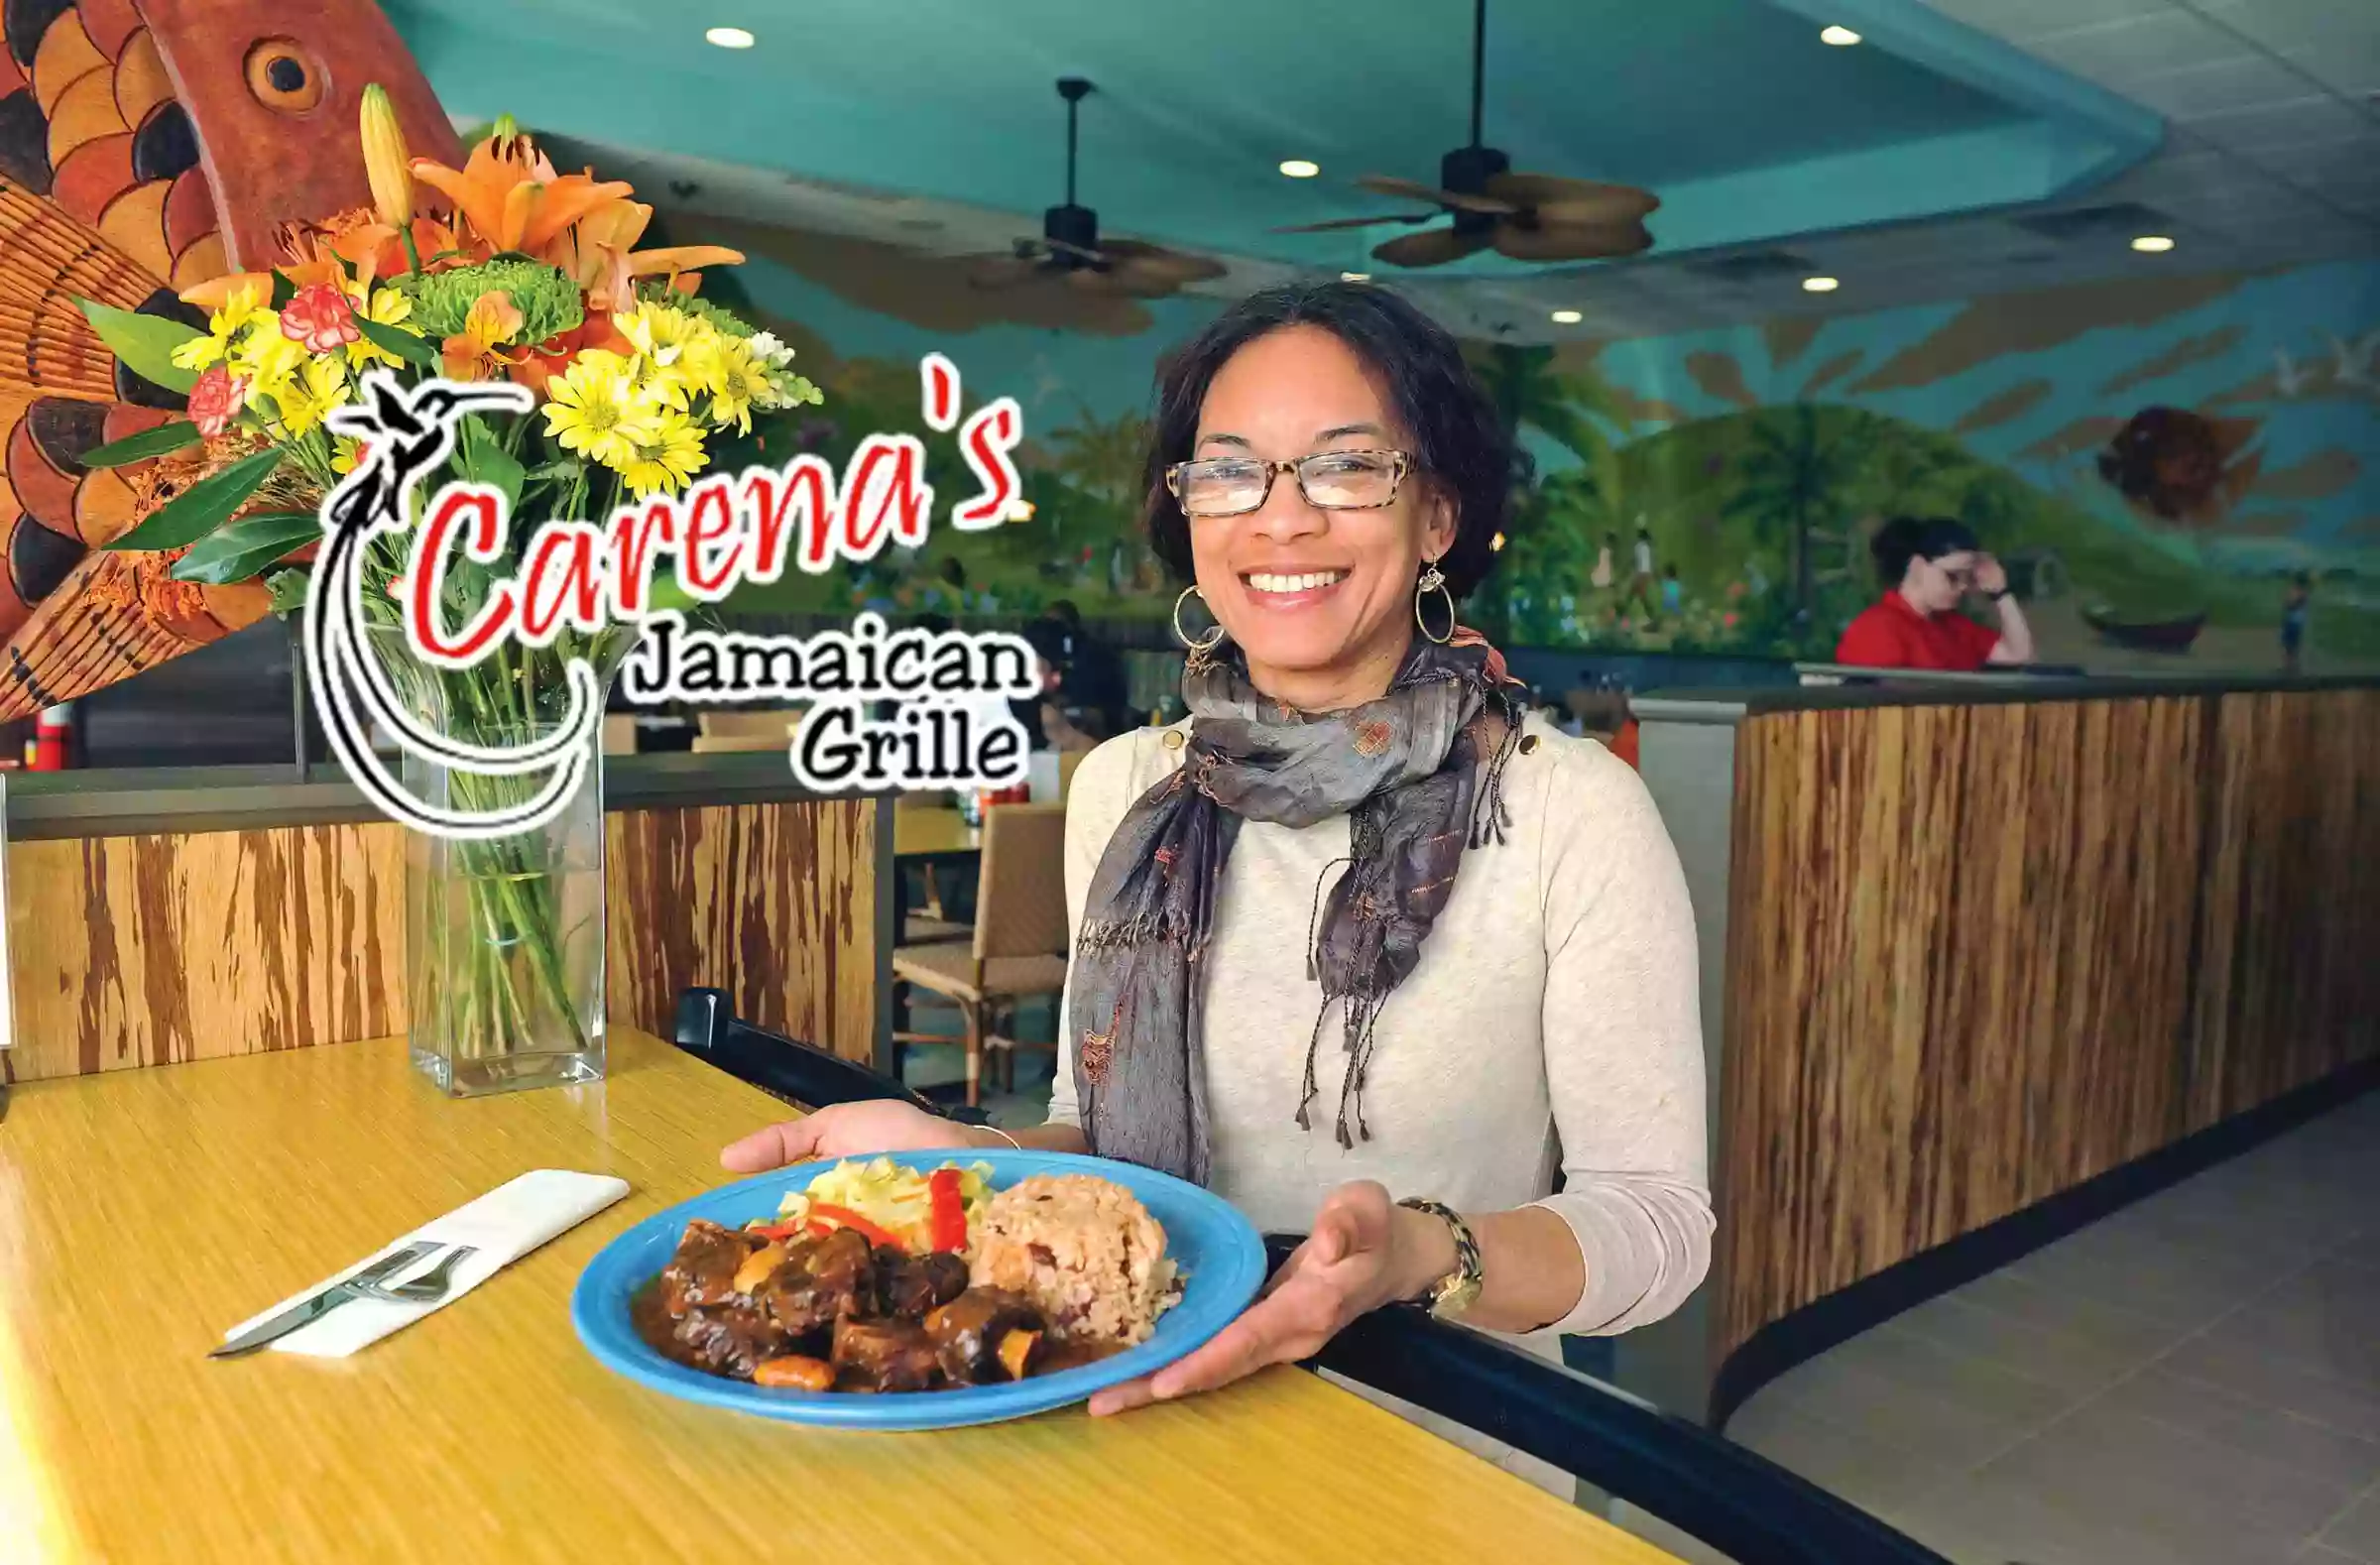 Carena's Jamaican Grille